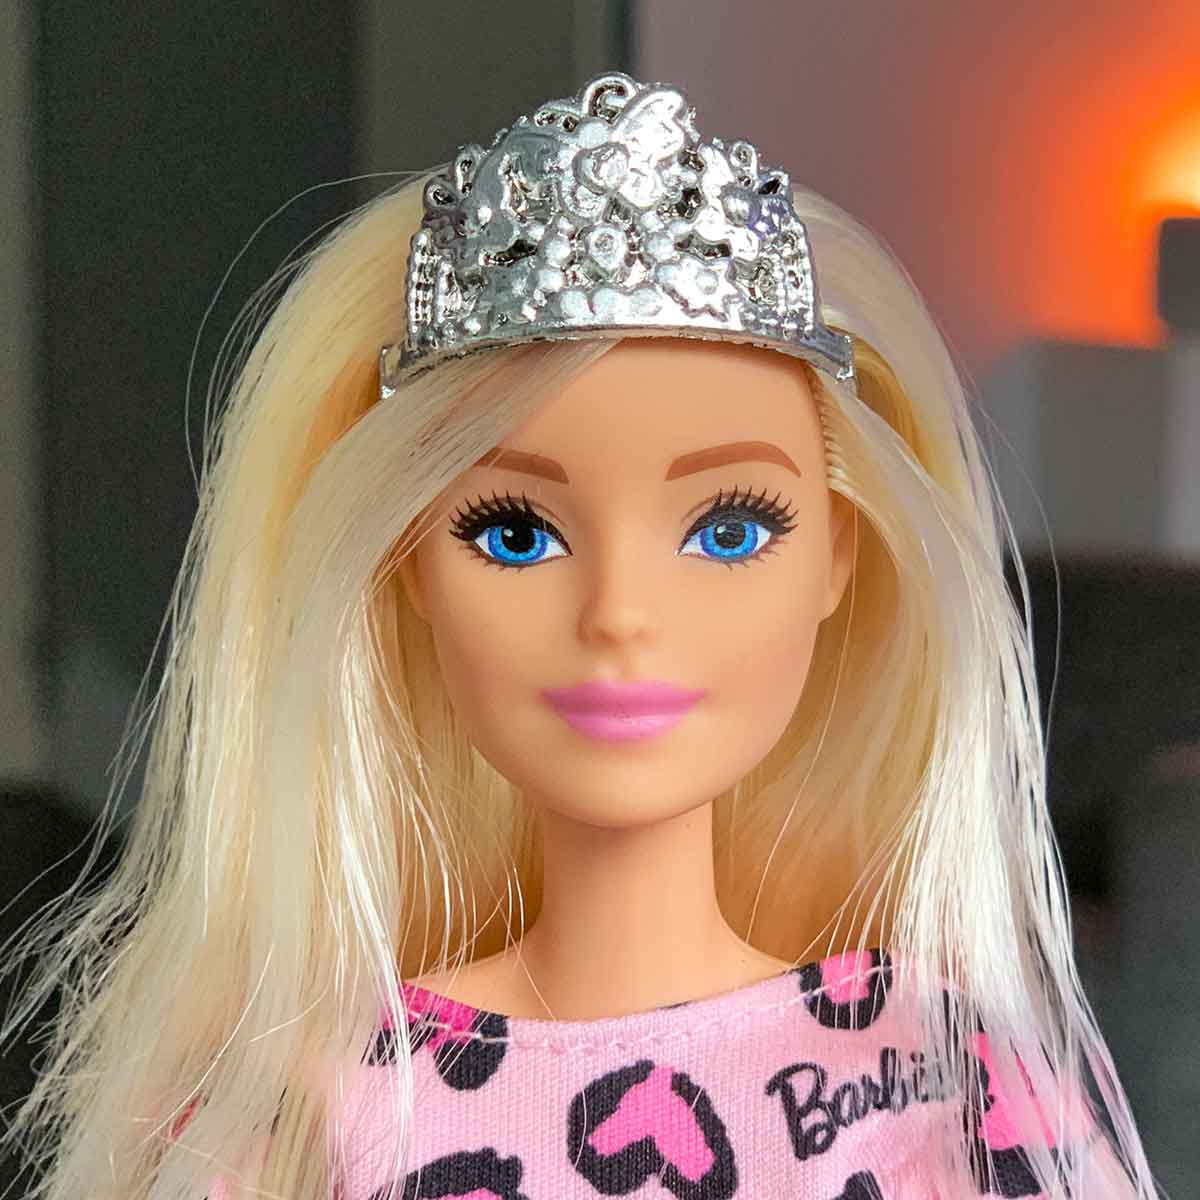 Barbie prinsessenkroon zilver met sierlijke vlinders